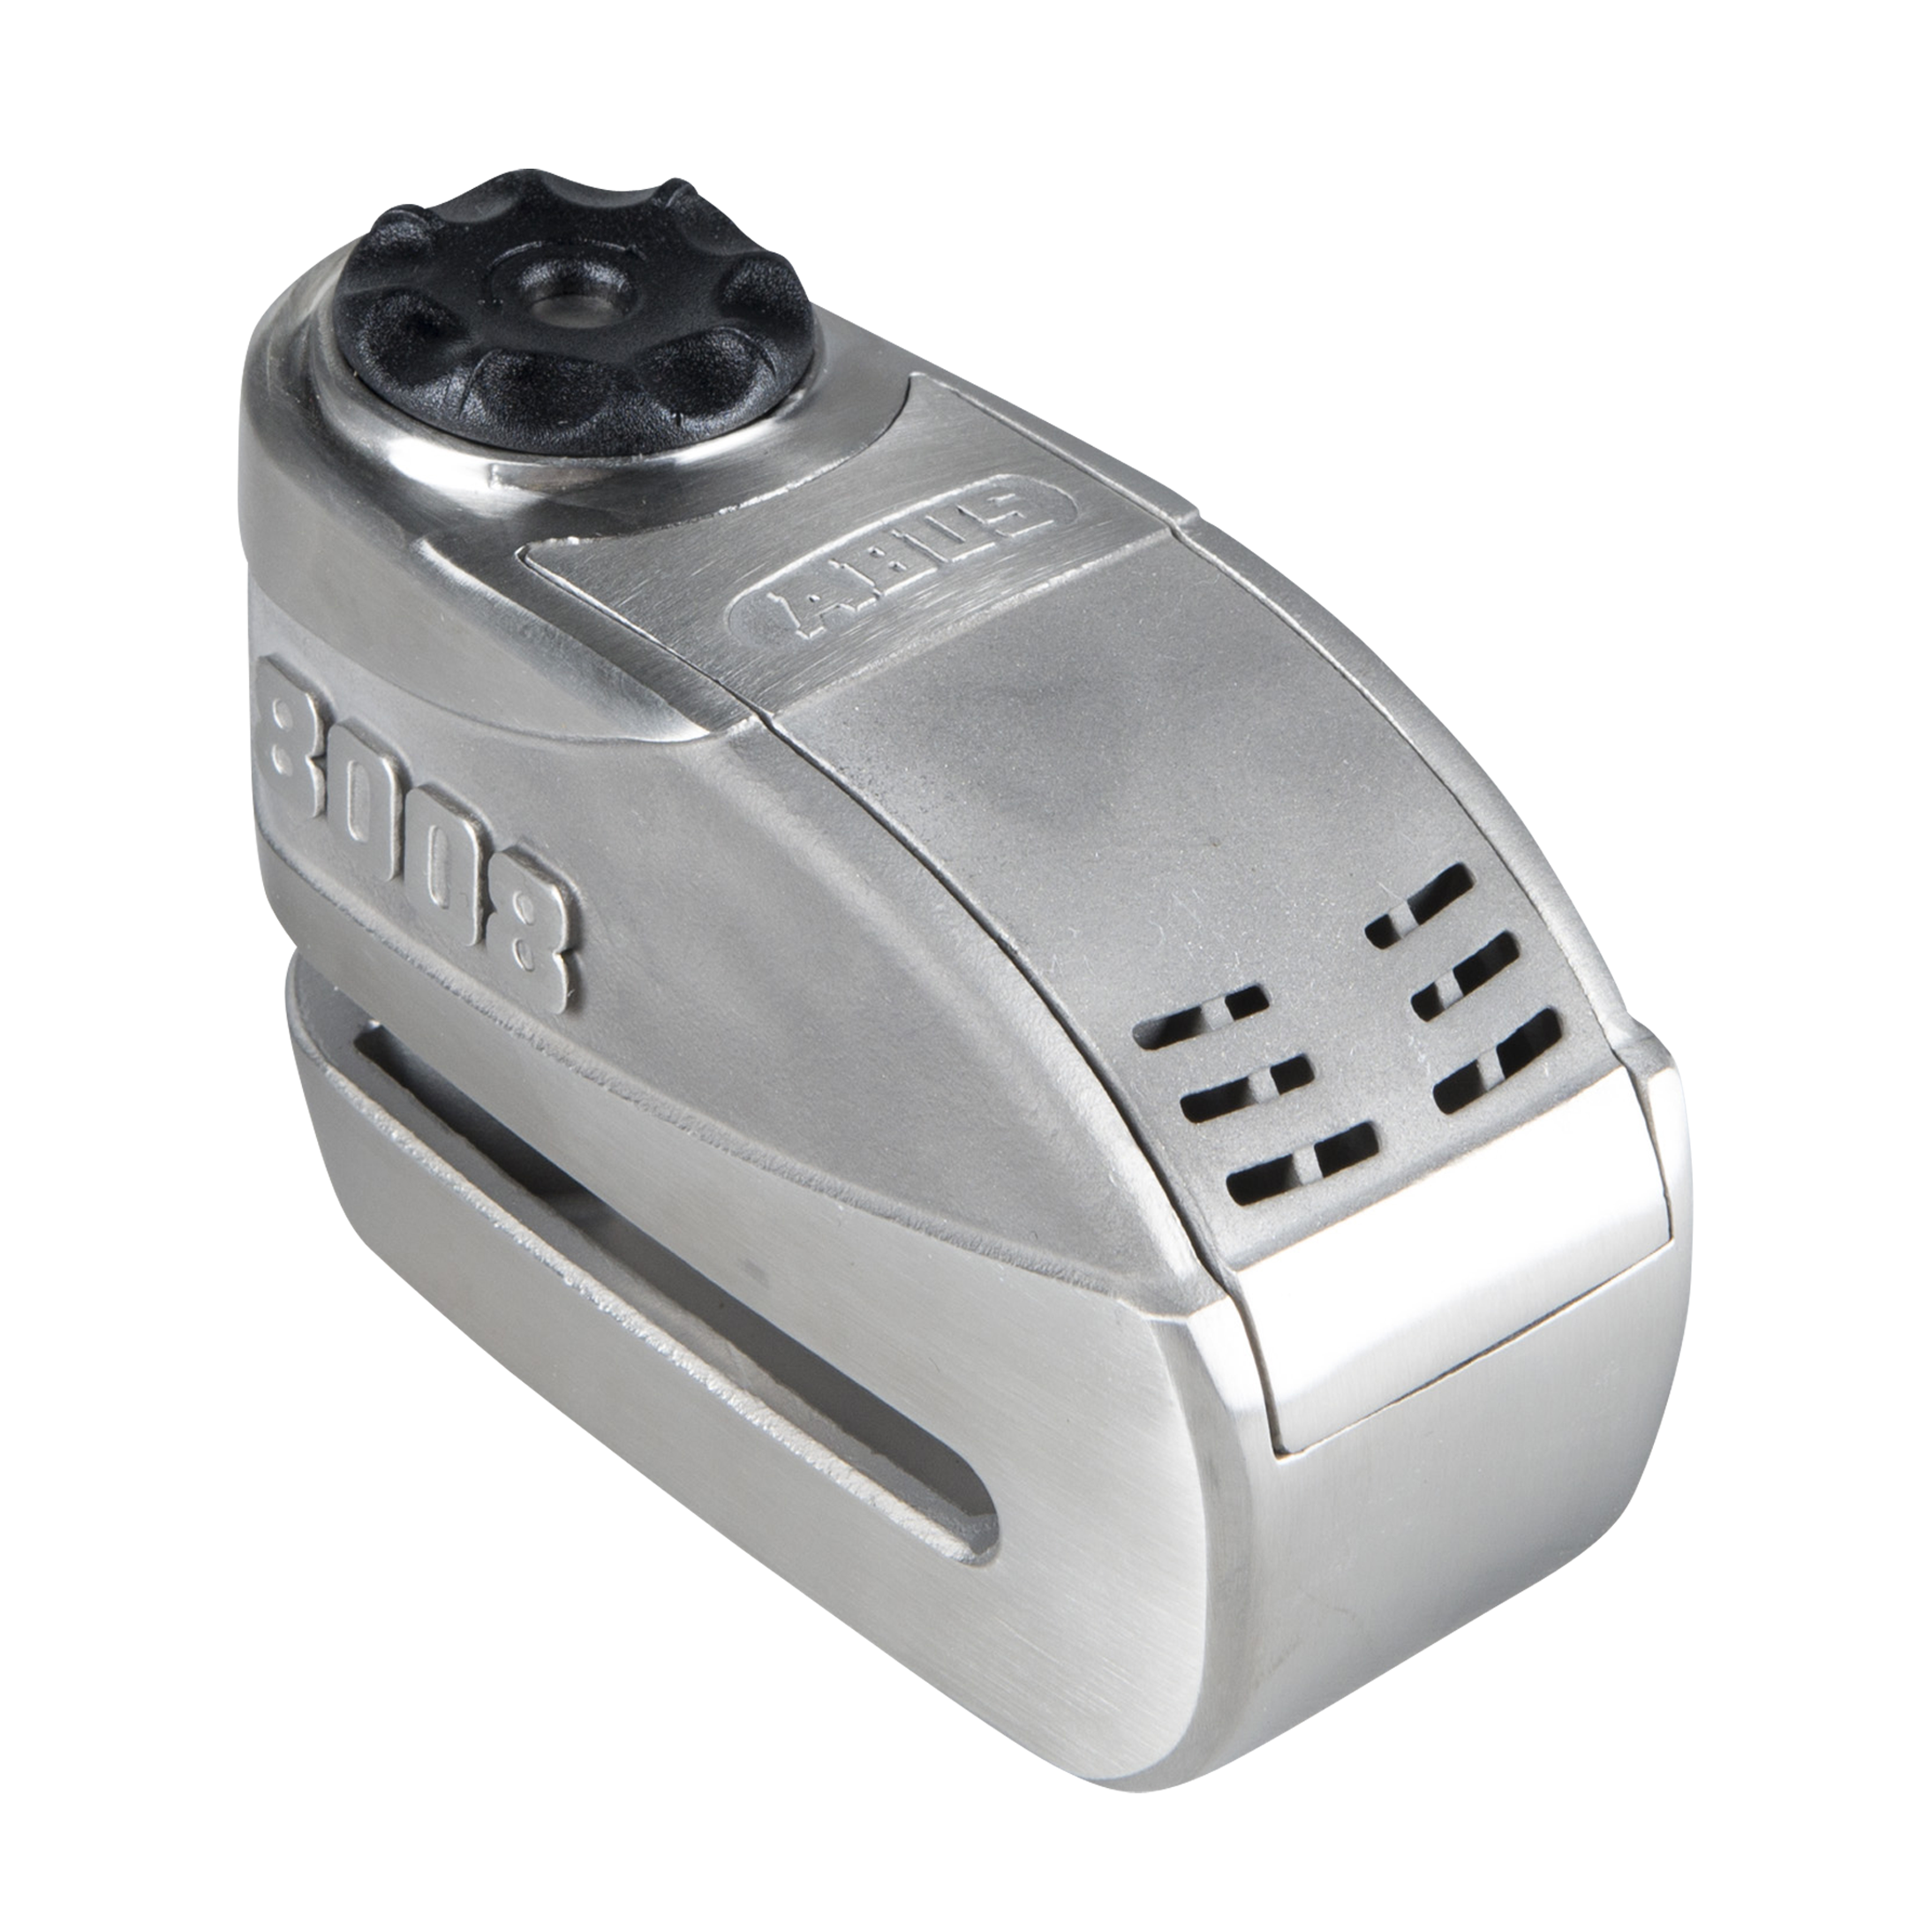 ABUS Granit Detecto 8008 Brake Disc Lock with Alarm - Now 20% Savings